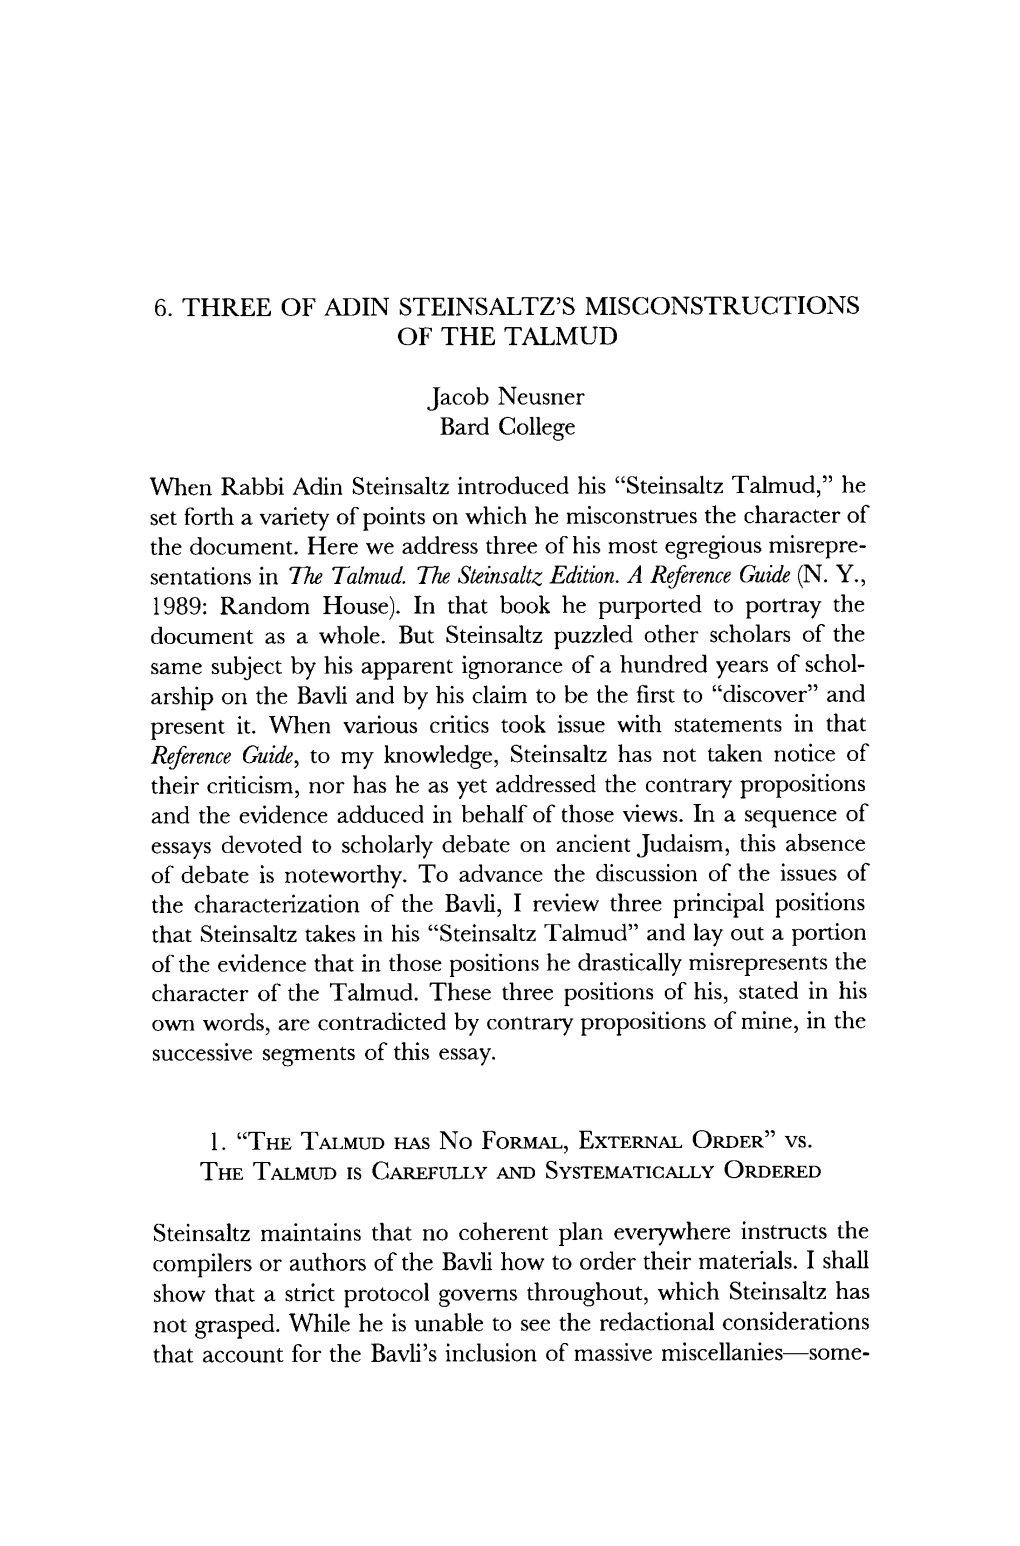 6. Three of Adin Steinsal Tz's Misconstructions of The